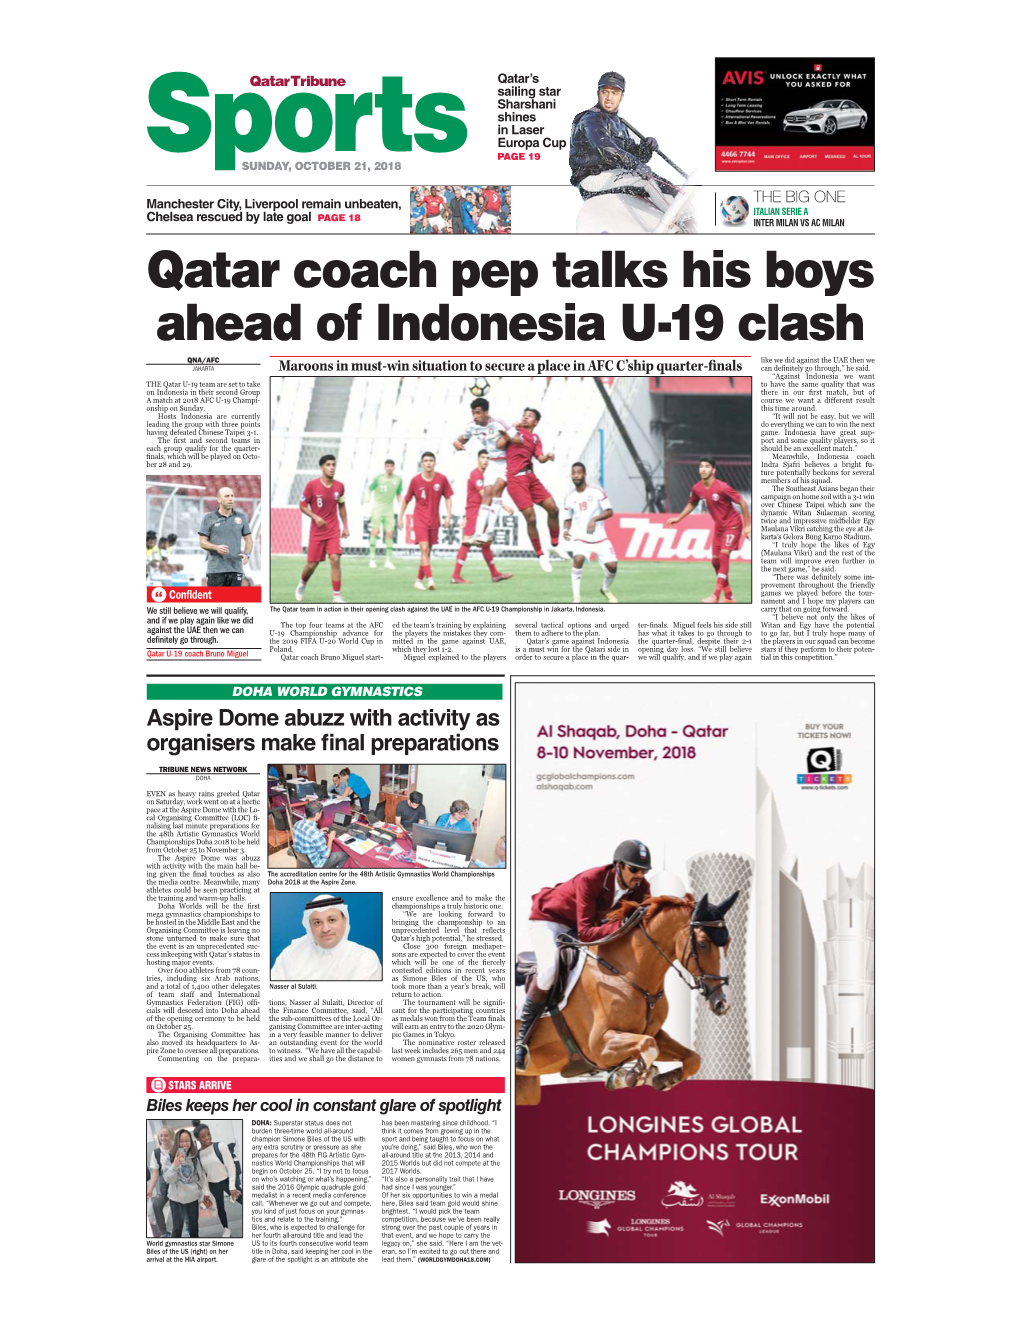 Qatar Coach Pep Talks His Boys Ahead of Indonesia U-19 Clash